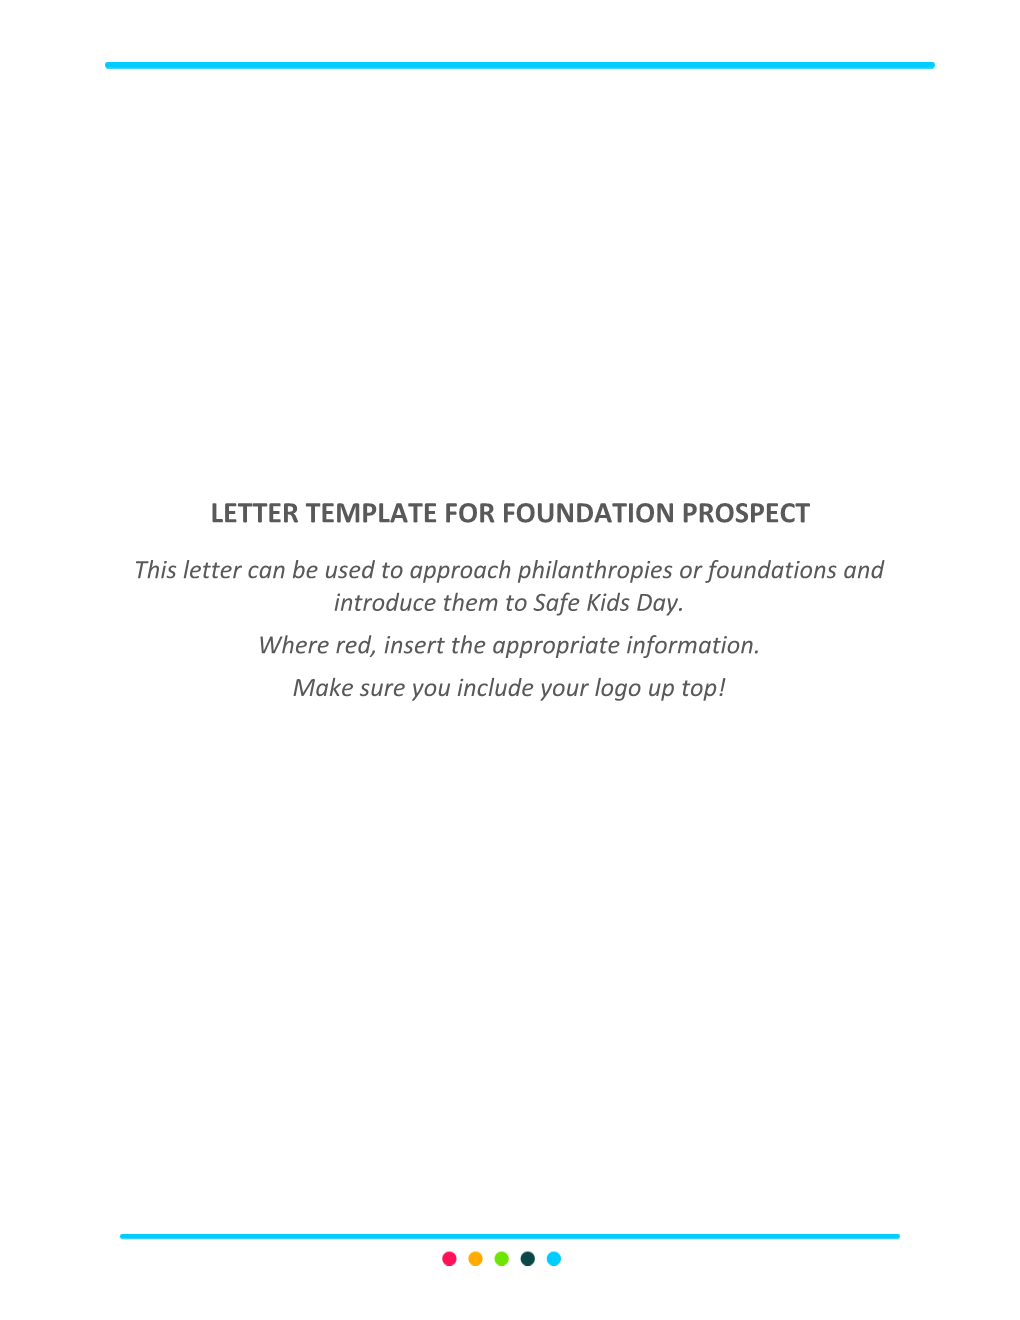 Letter Template for Foundation Prospect